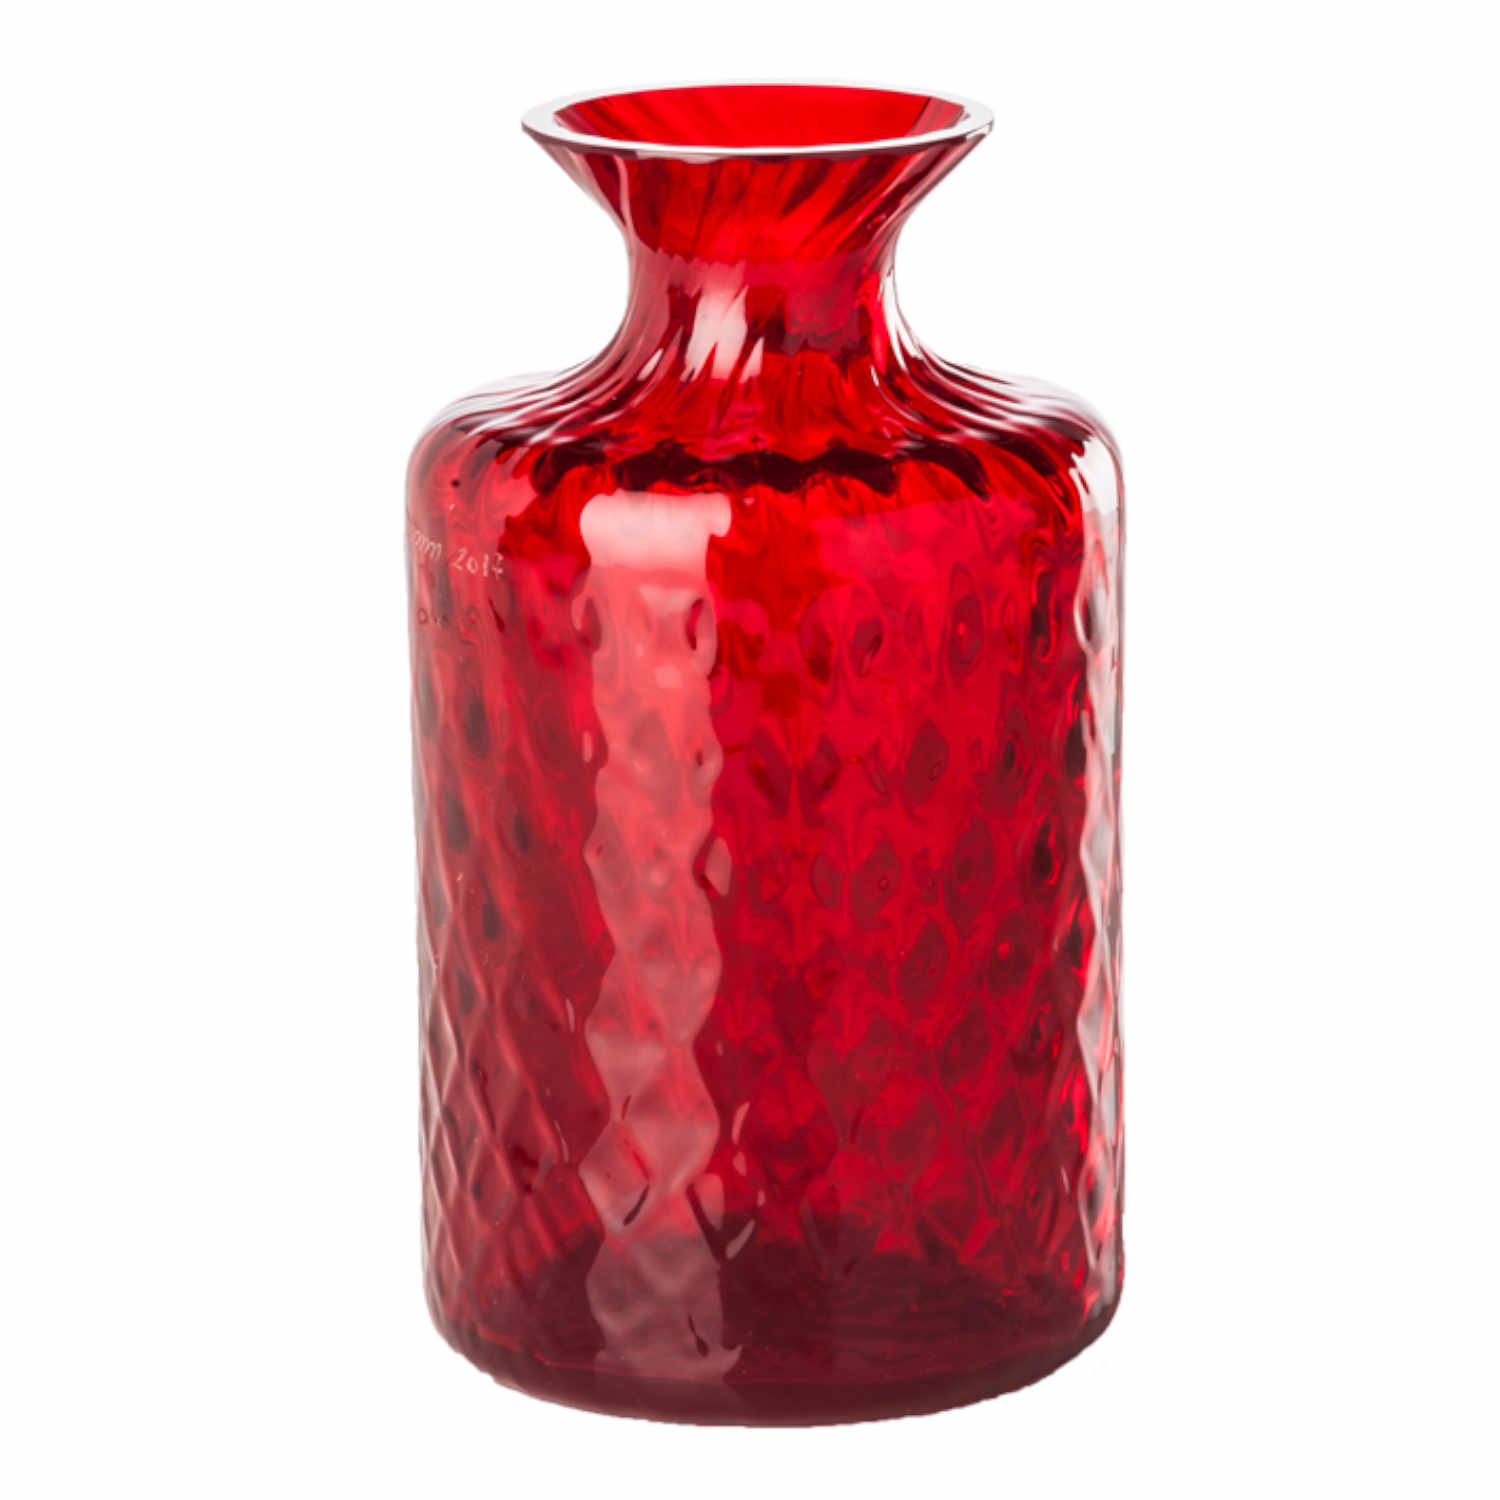 MONOFIORE CARNEVALE Vase, Grösse h. 16 cm, Farbe red von Venini